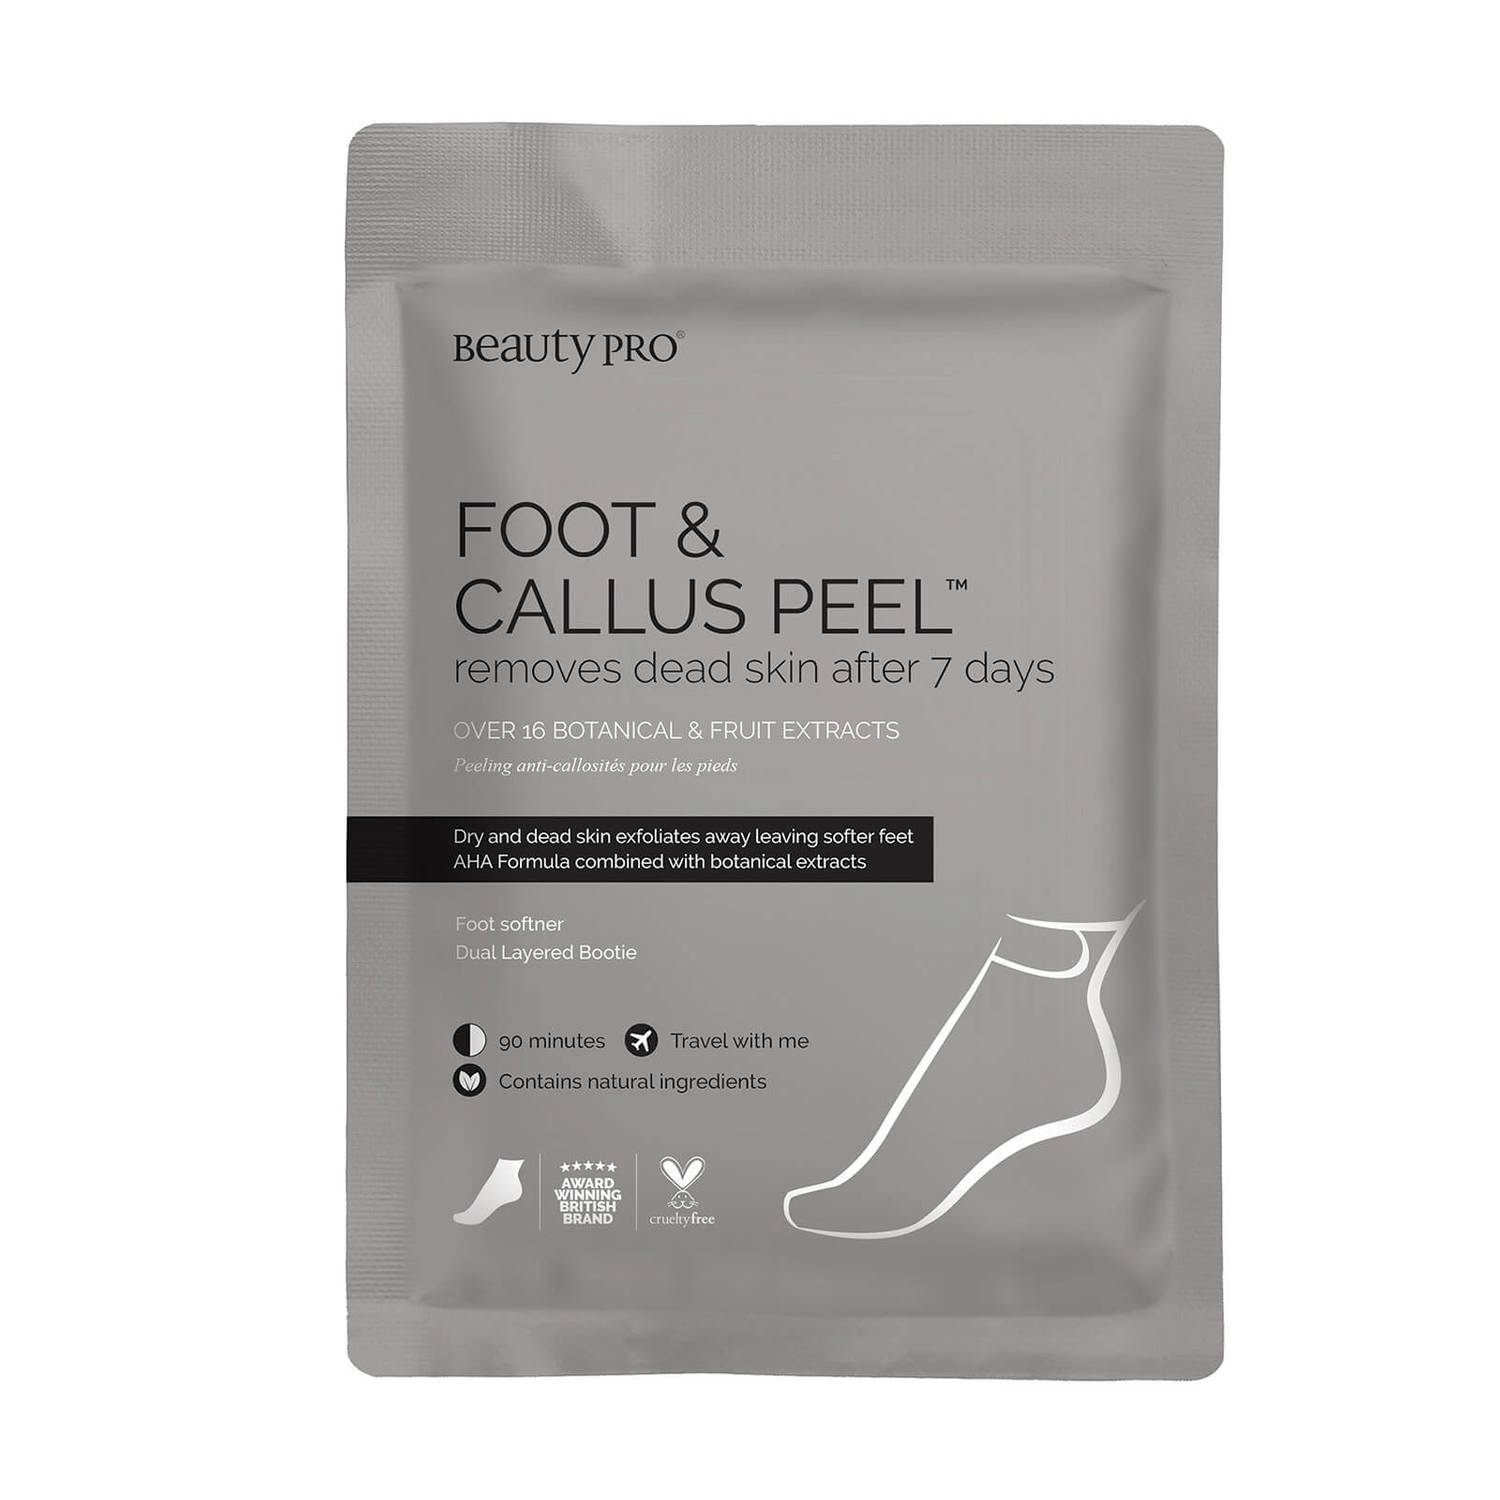 5.BeautyPro Foot &amp; Callus Peel €7.50, 